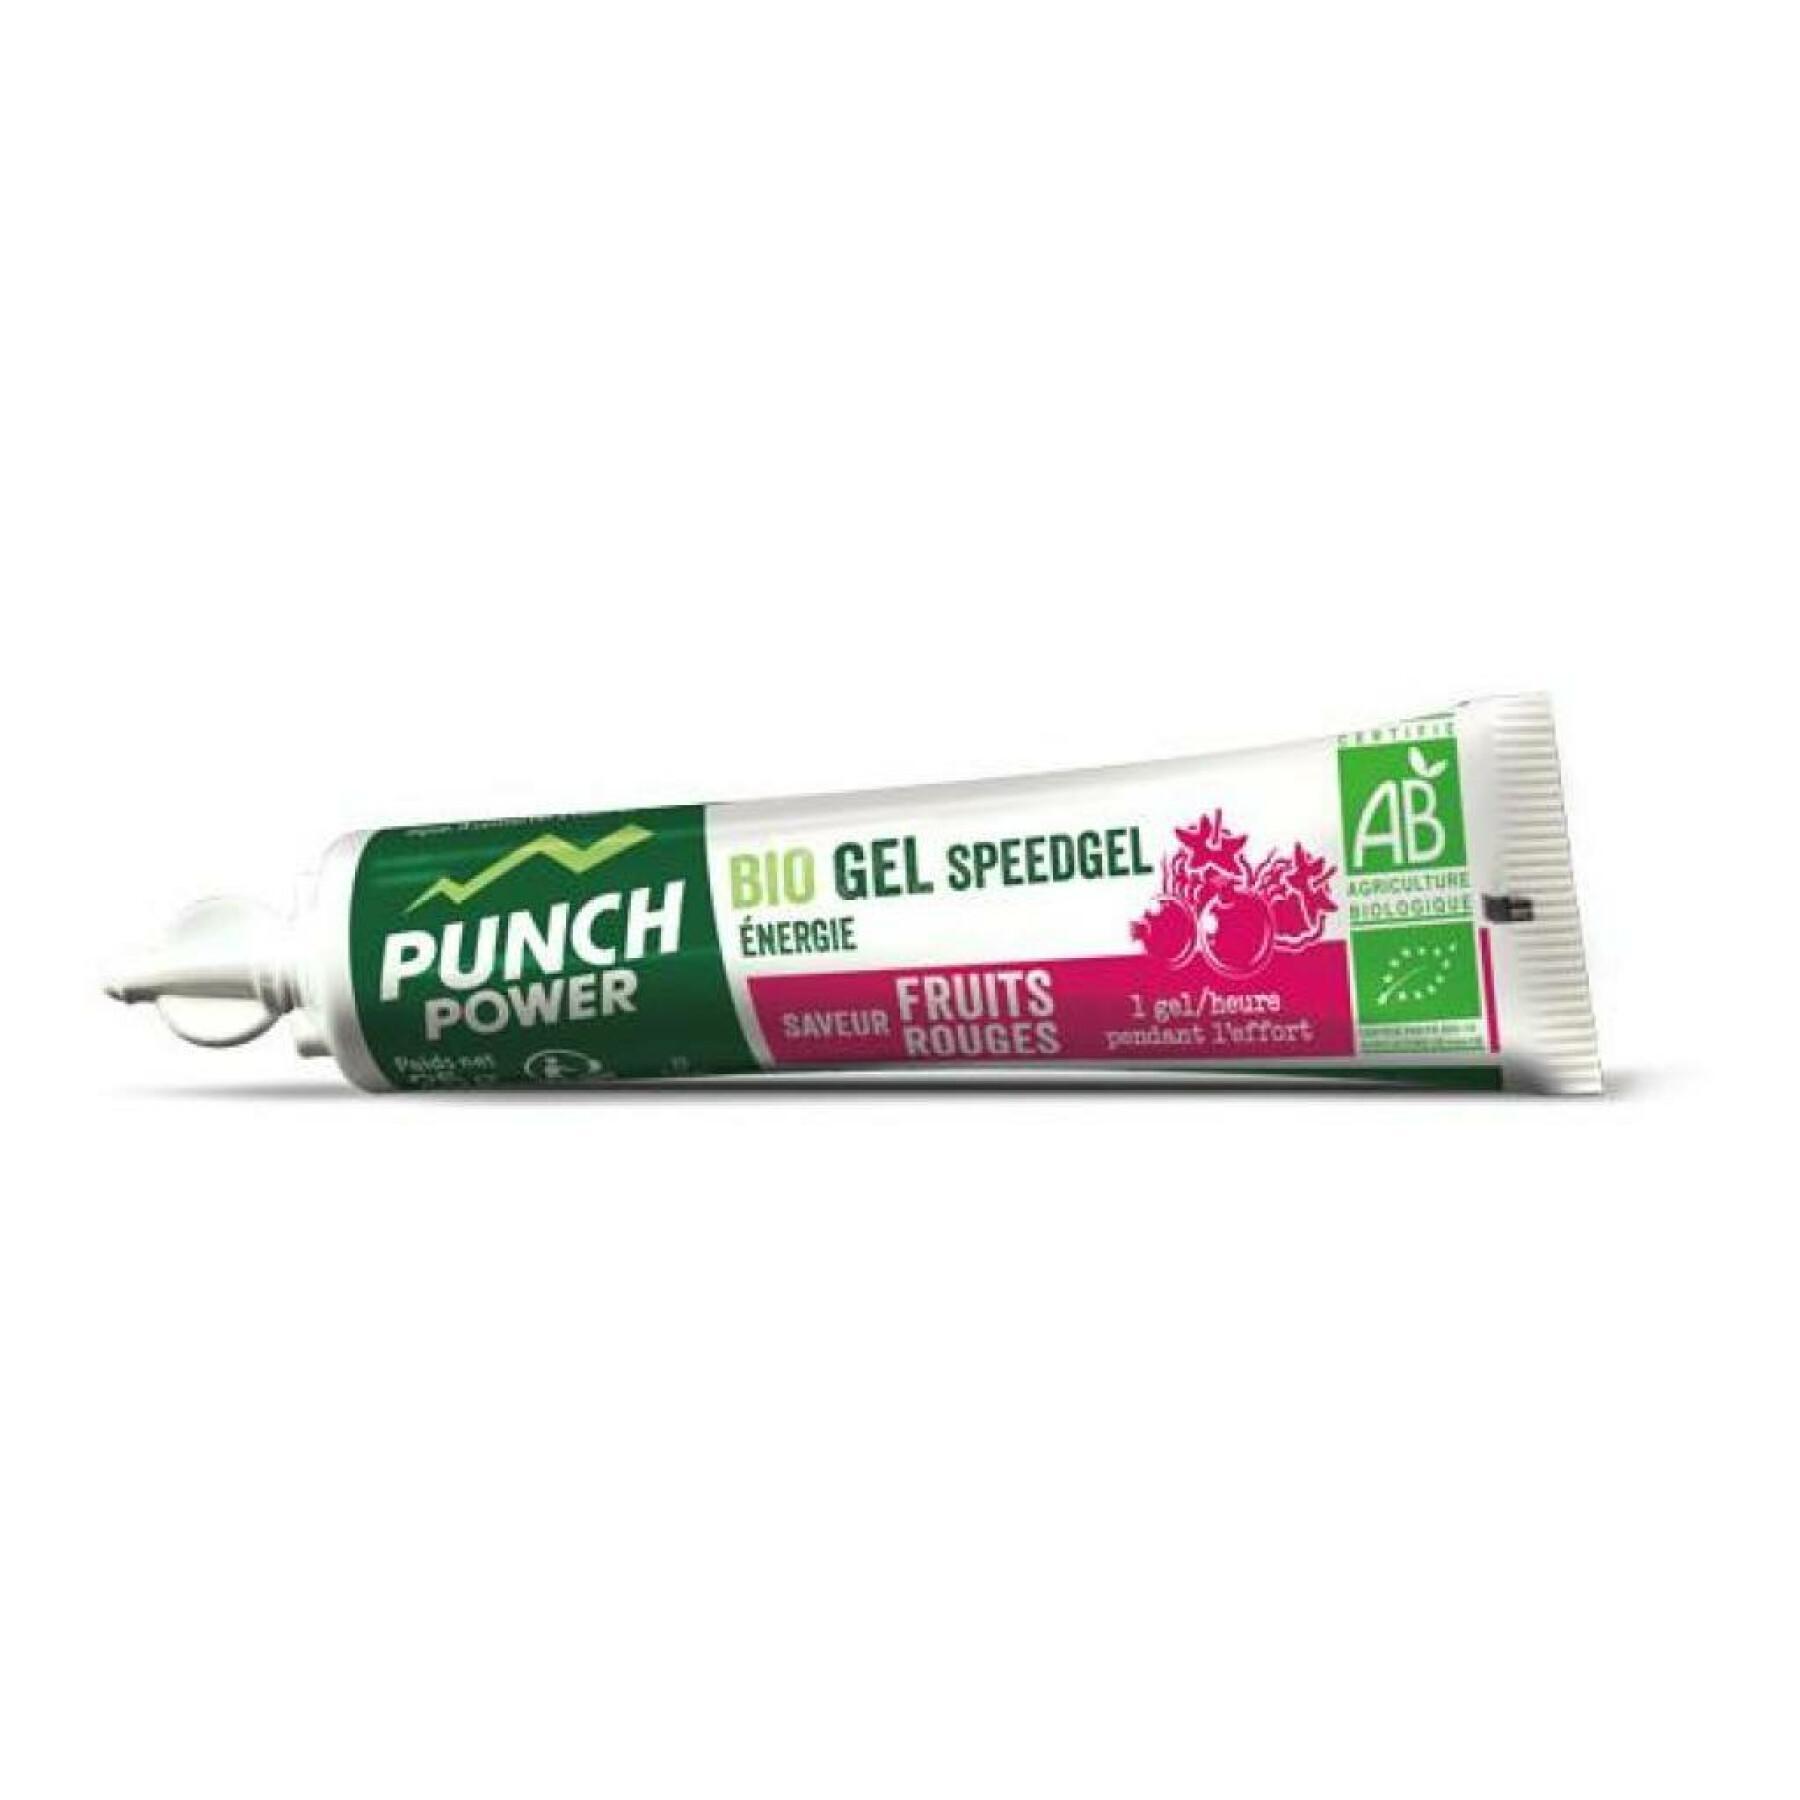 Energi gel Punch Power Speedgel Fruits rouges (x40)